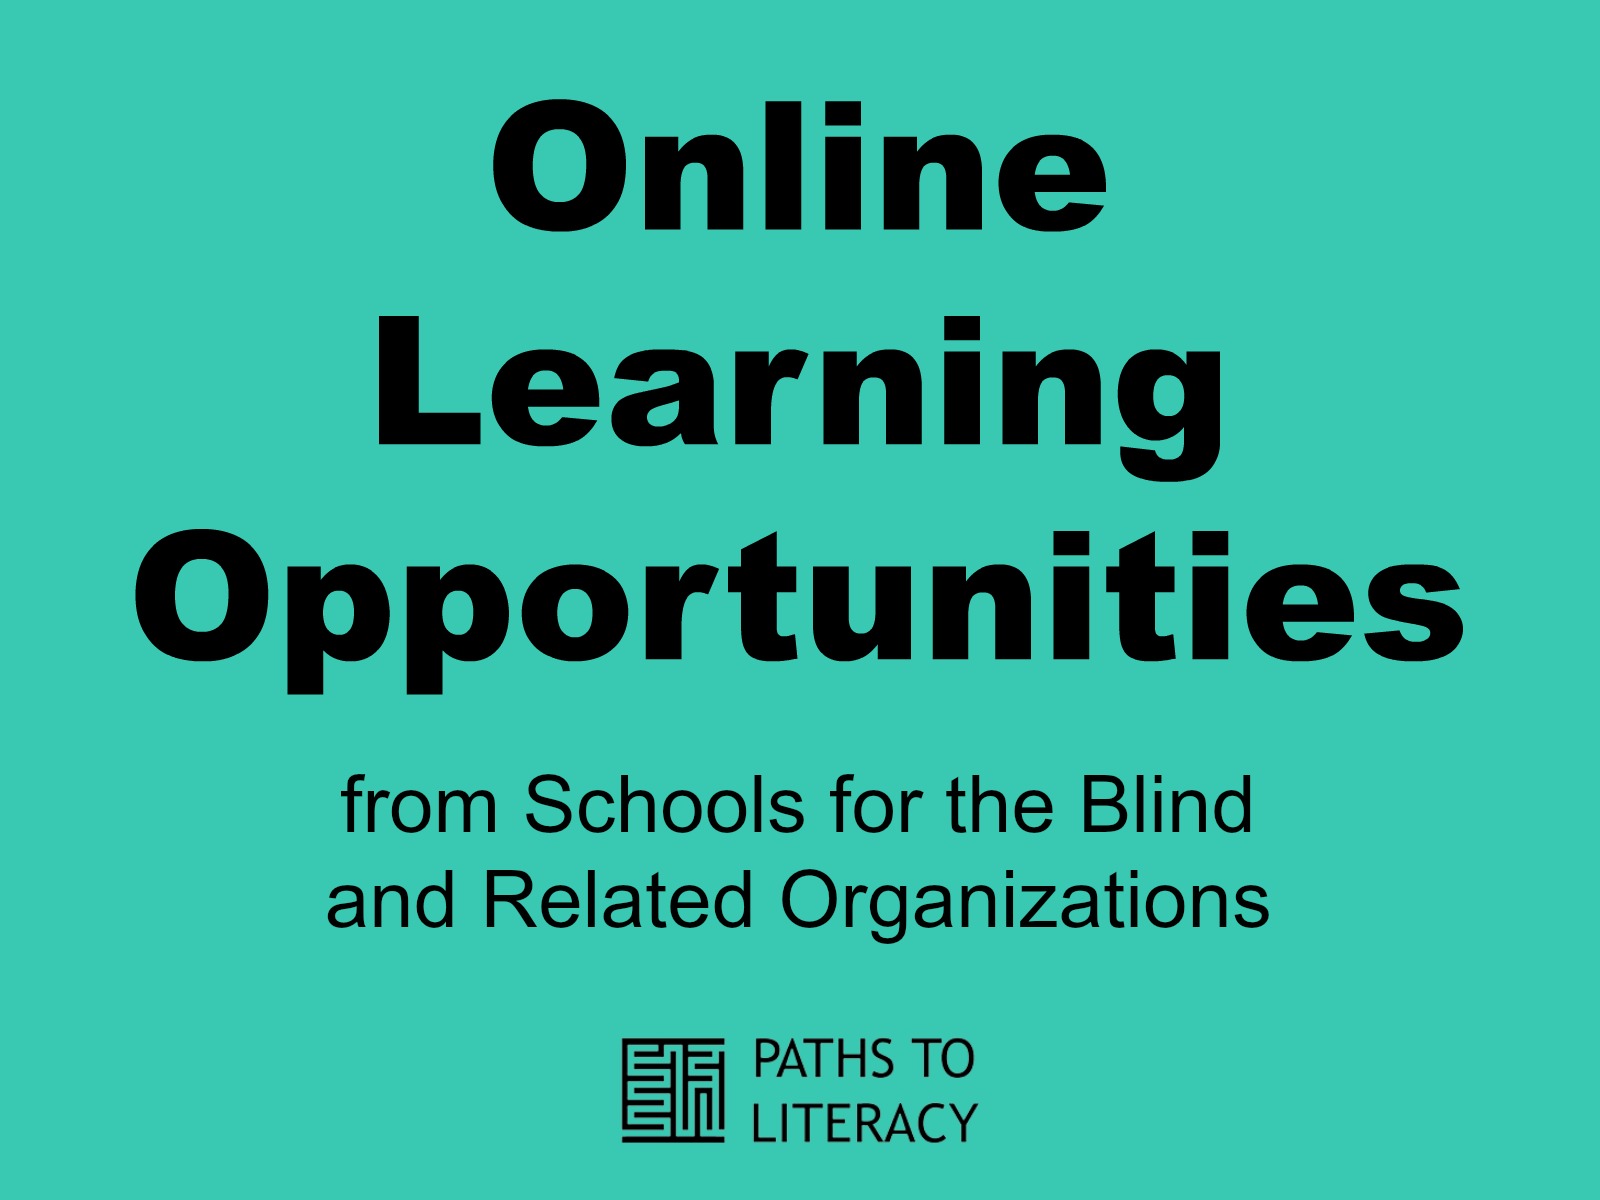 Online learning opportunities